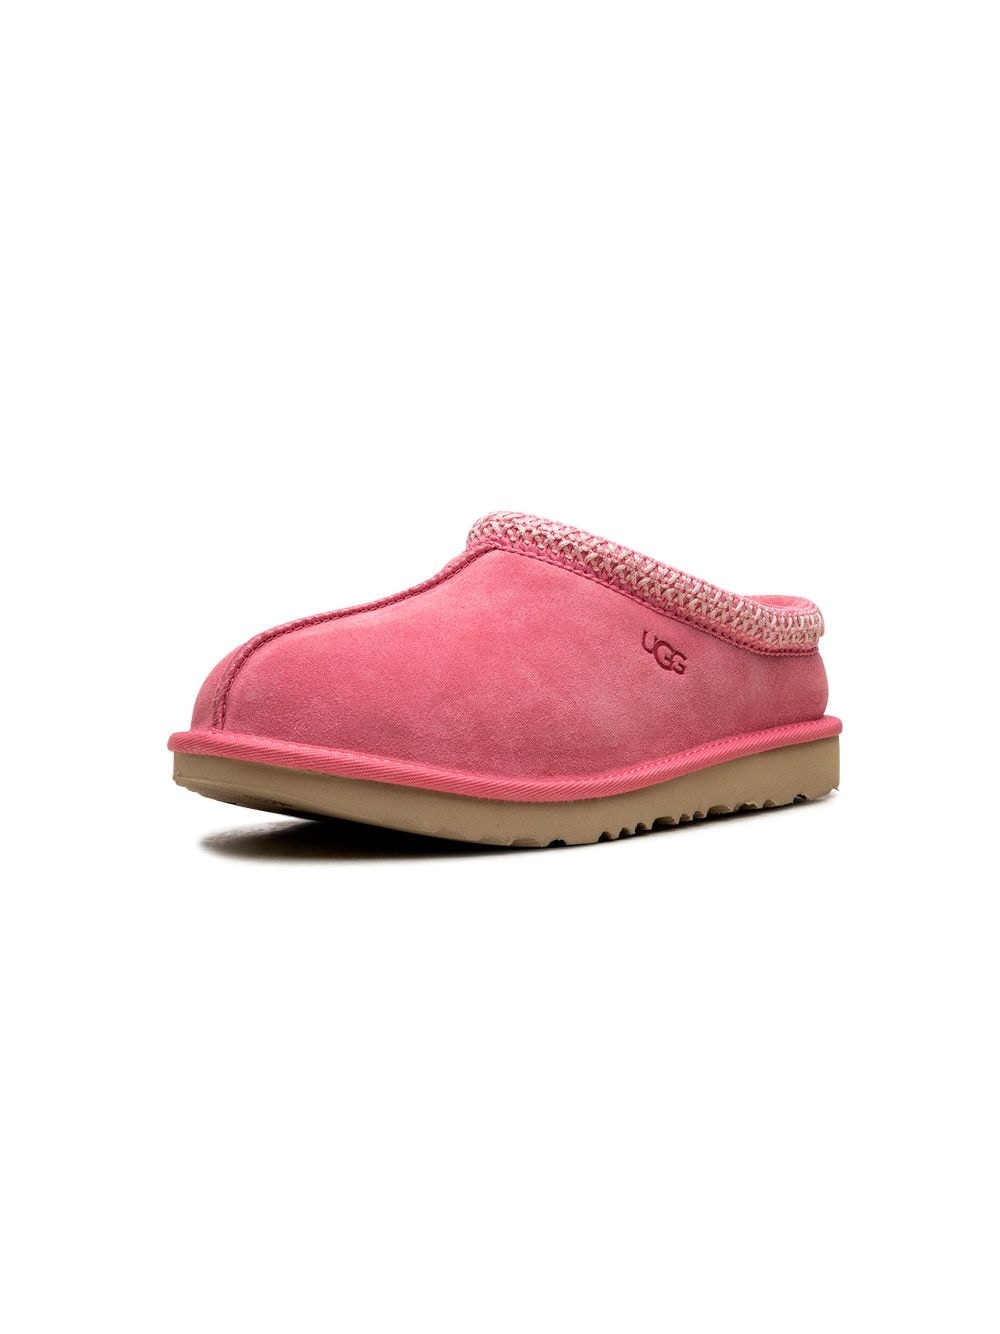 UGG Kids Tasman II "Pink Rose" slippers